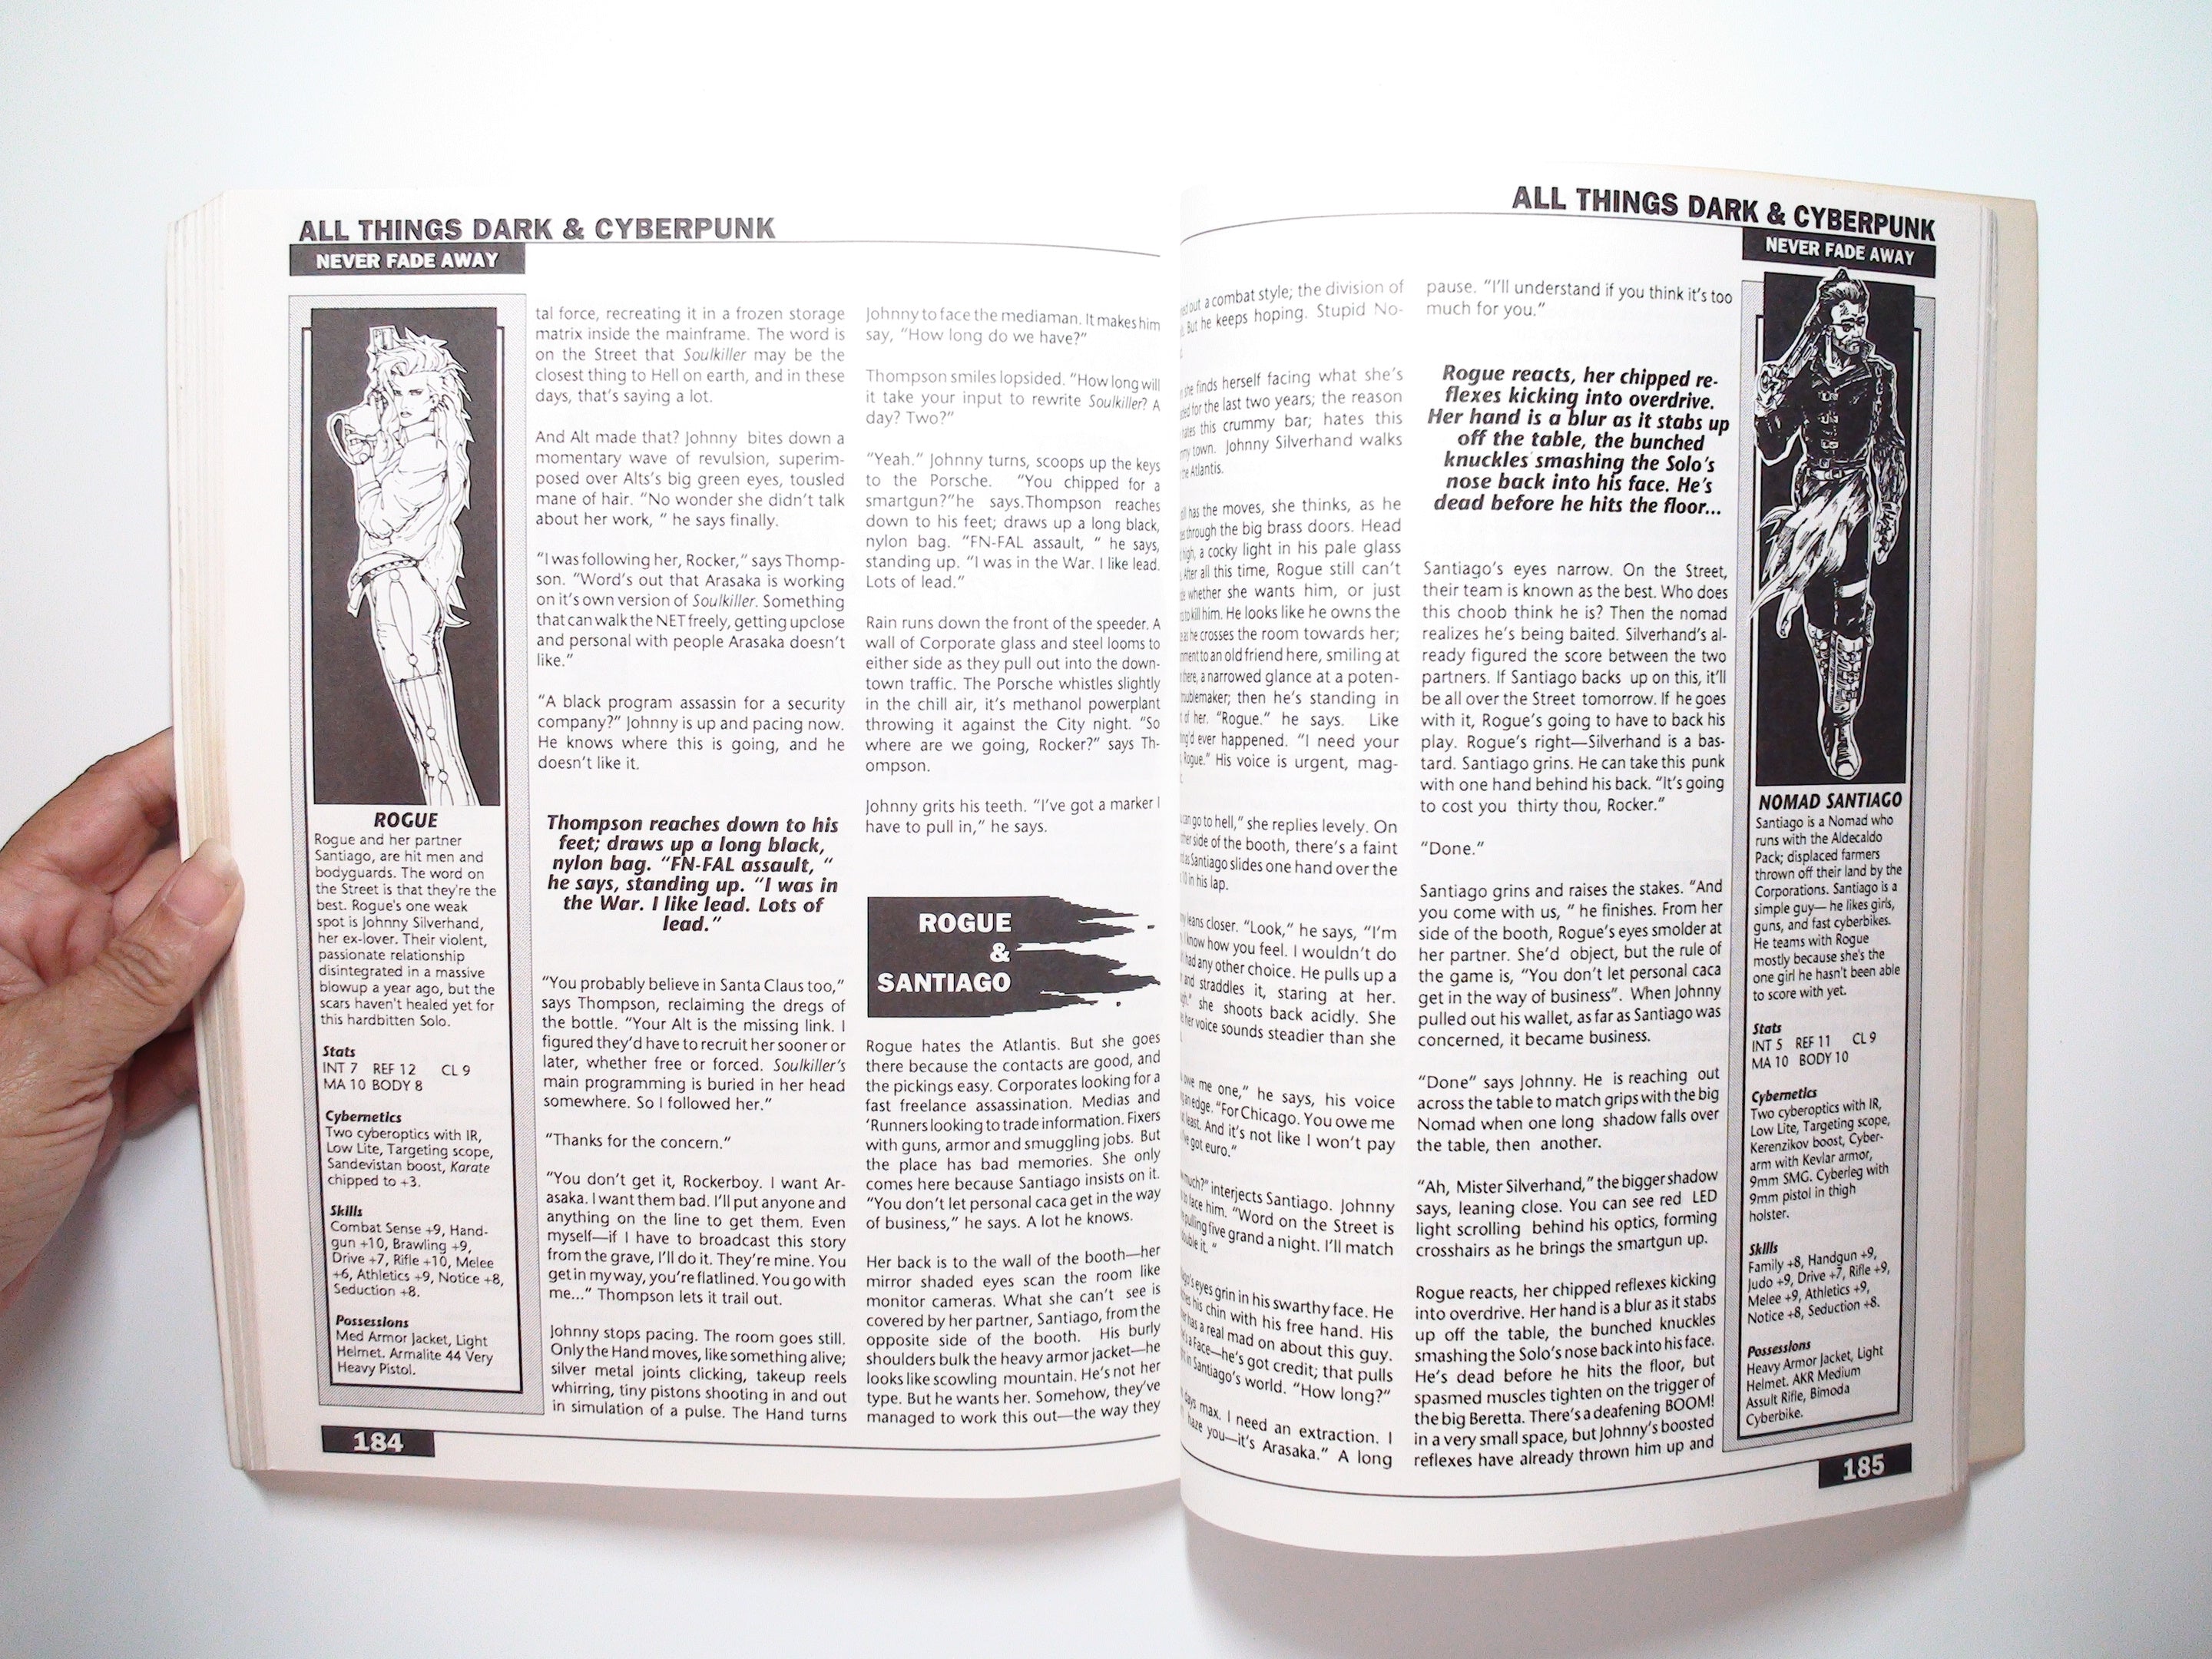 Cyberpunk 2020 RPG 2nd Ed., 1st Print, Core Rulebook, R. Talsorian CP3002, 1990